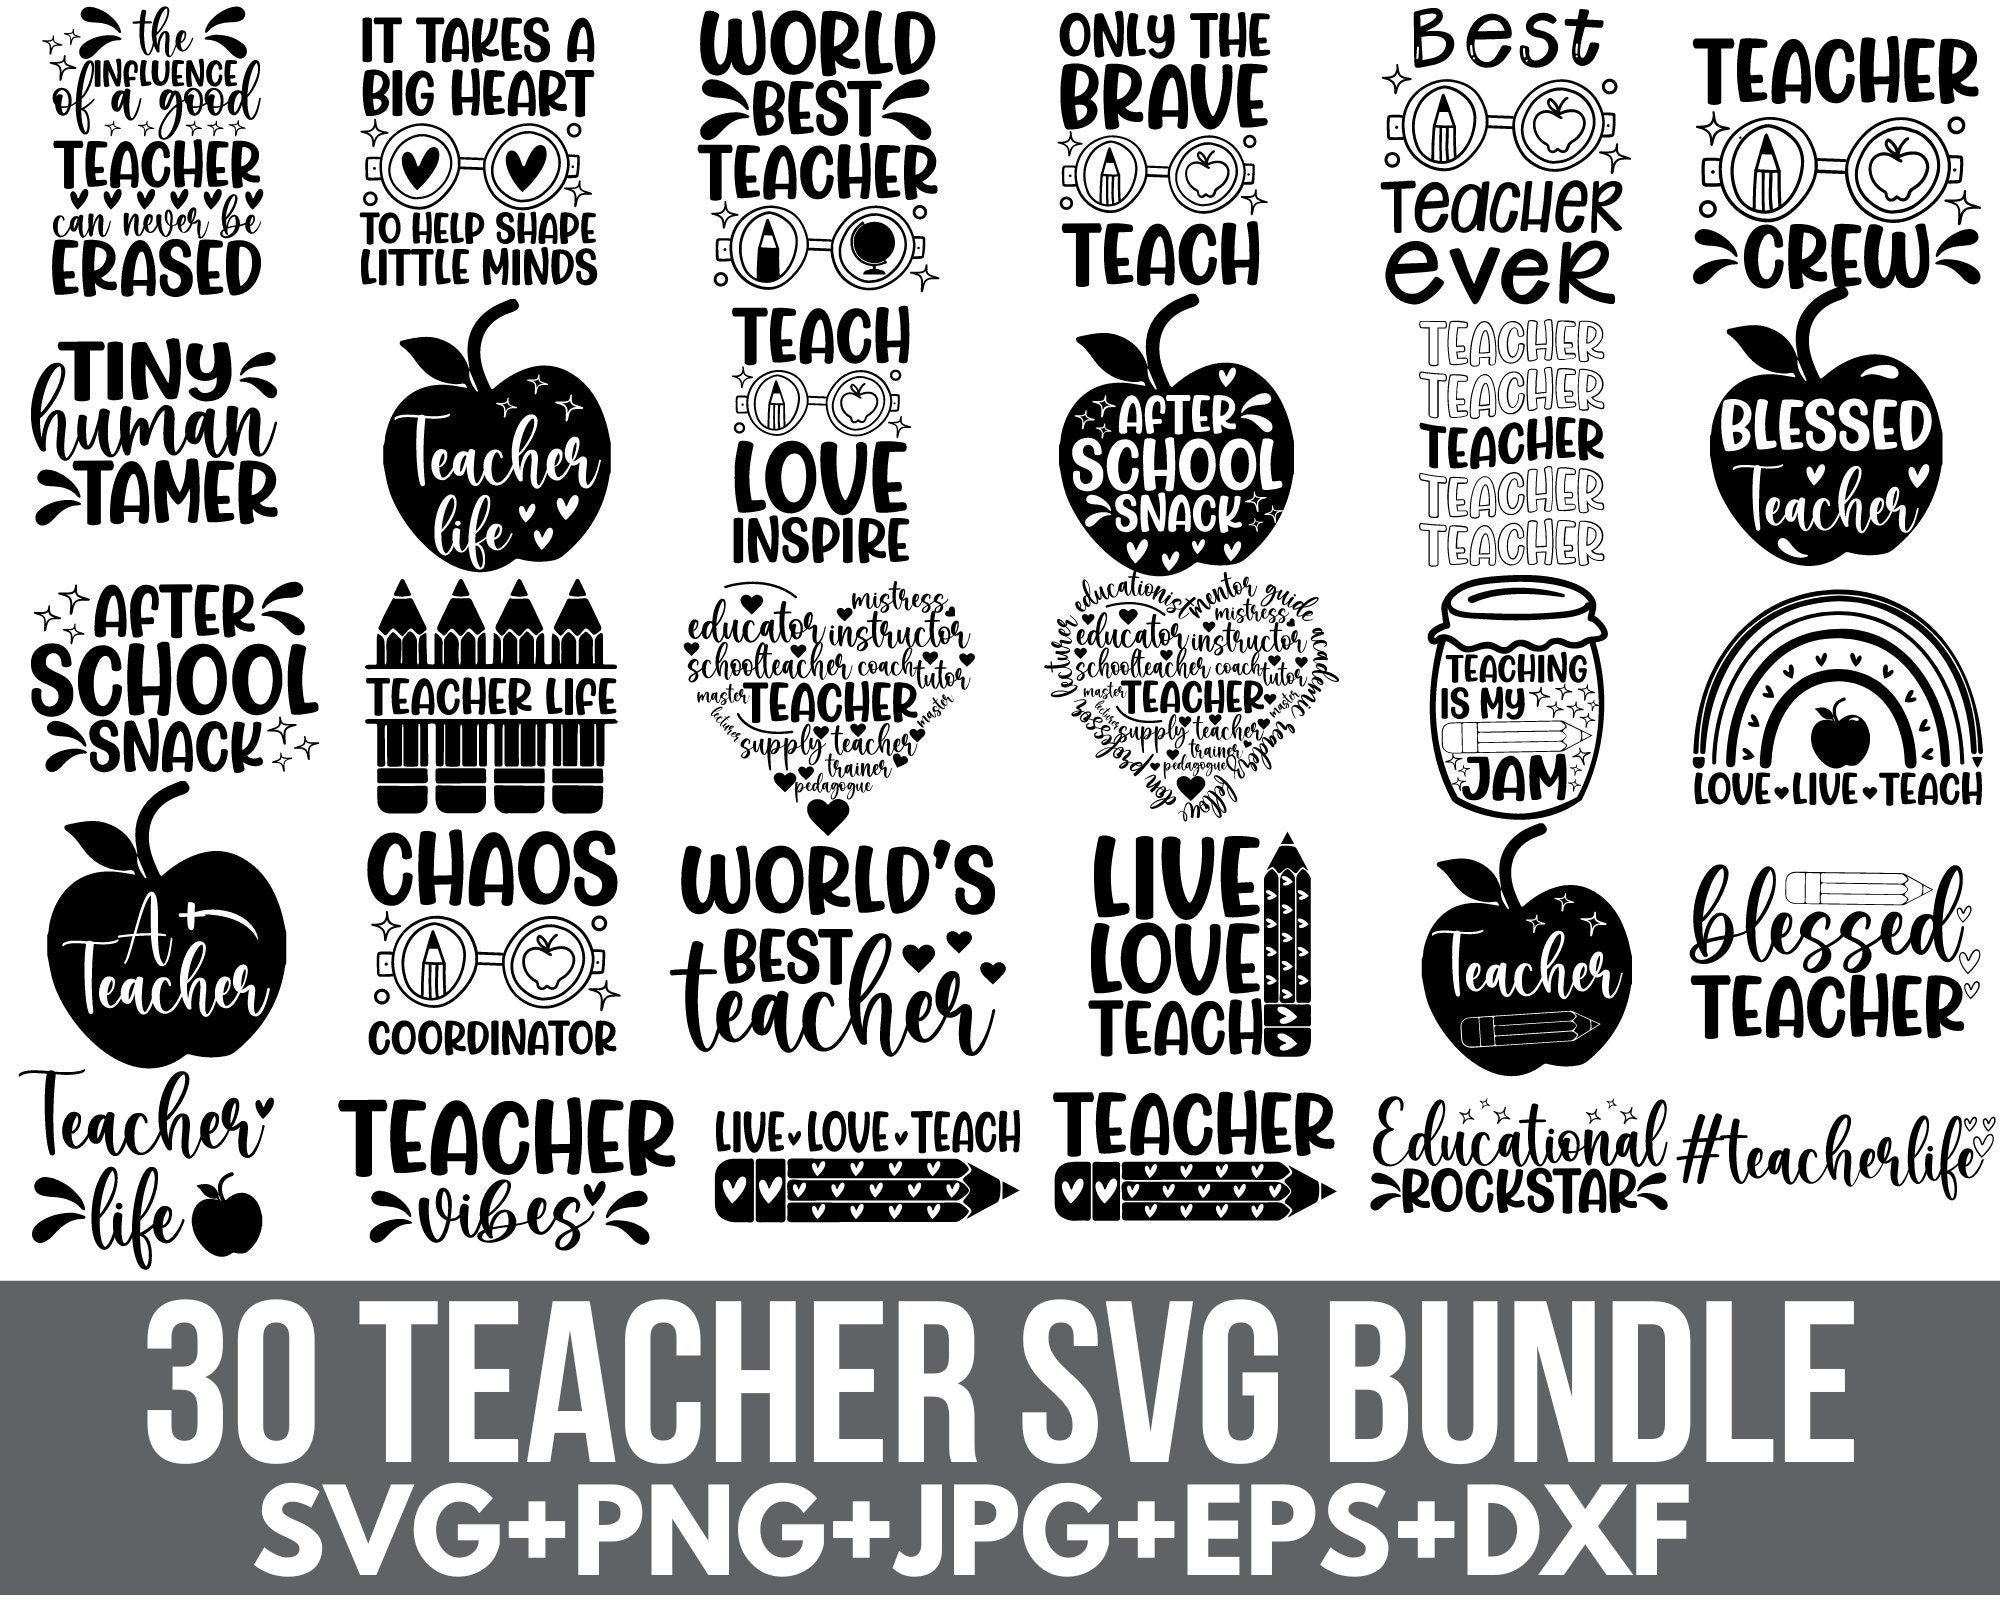 30 Teacher Svg Bundle, Teacher Quote Svg, Teacher Life Svg, Back to School Svg, Teacher shirt Svg, Cricut Silhouette